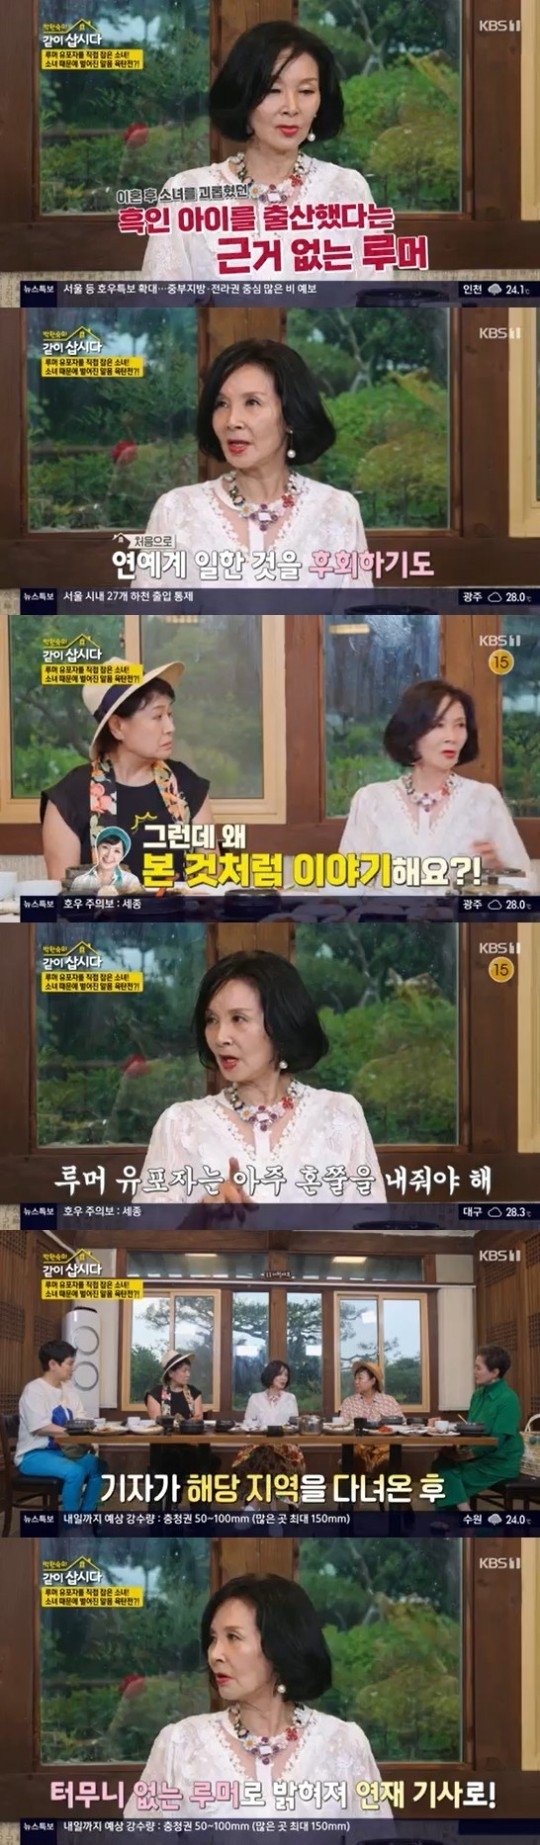 KBS 1TV ‘박원숙의 같이 삽시다 시즌3’